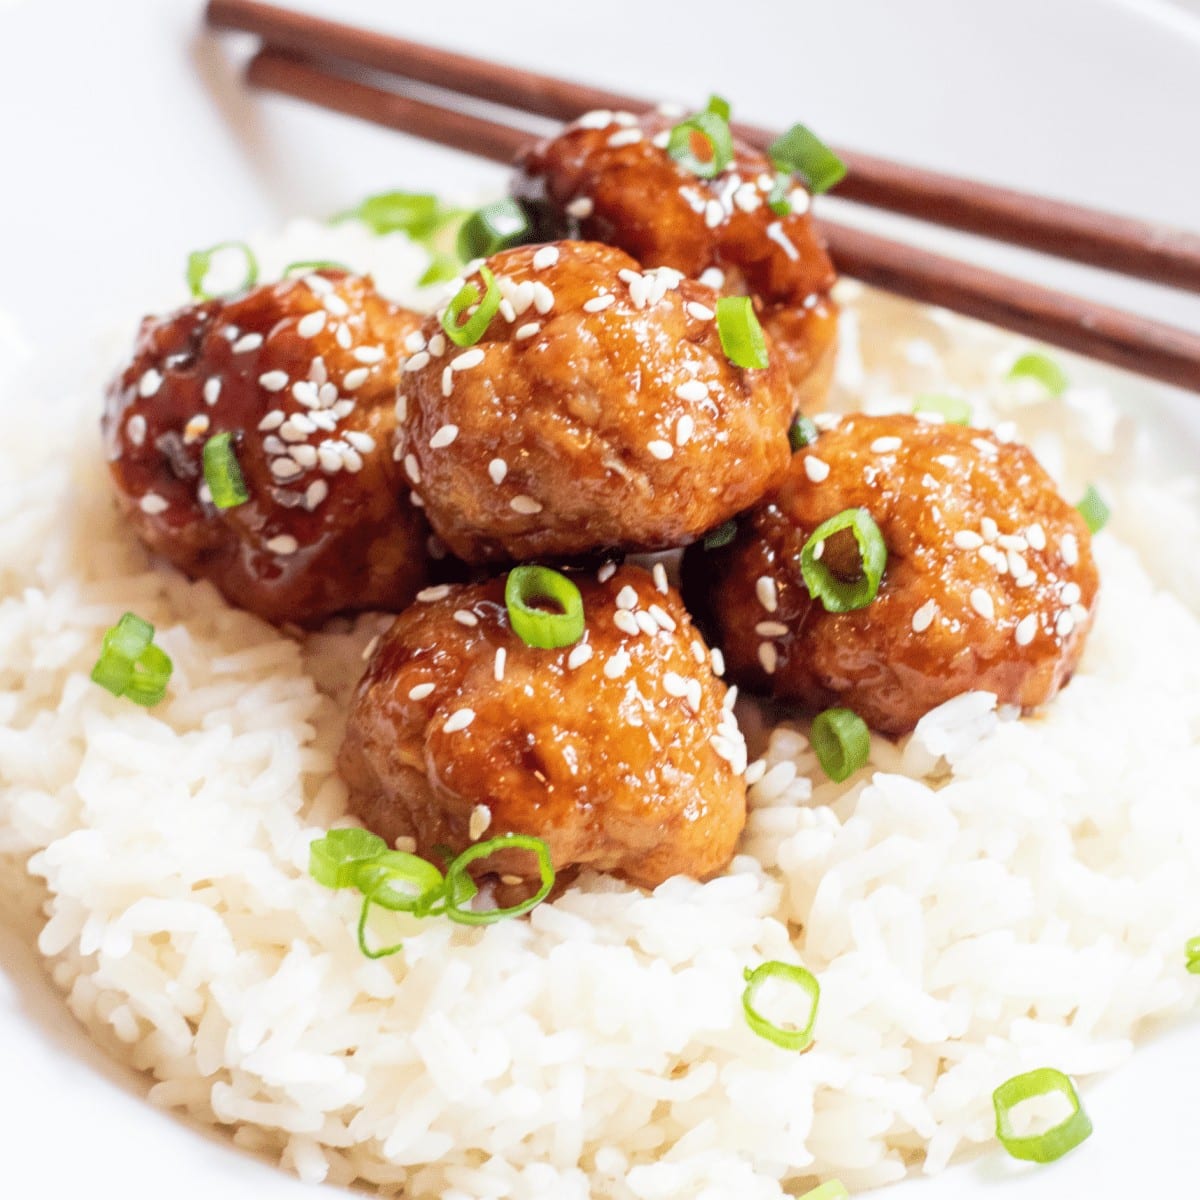 Sweet sesame ginger meatballs atop rice with chopsticks.